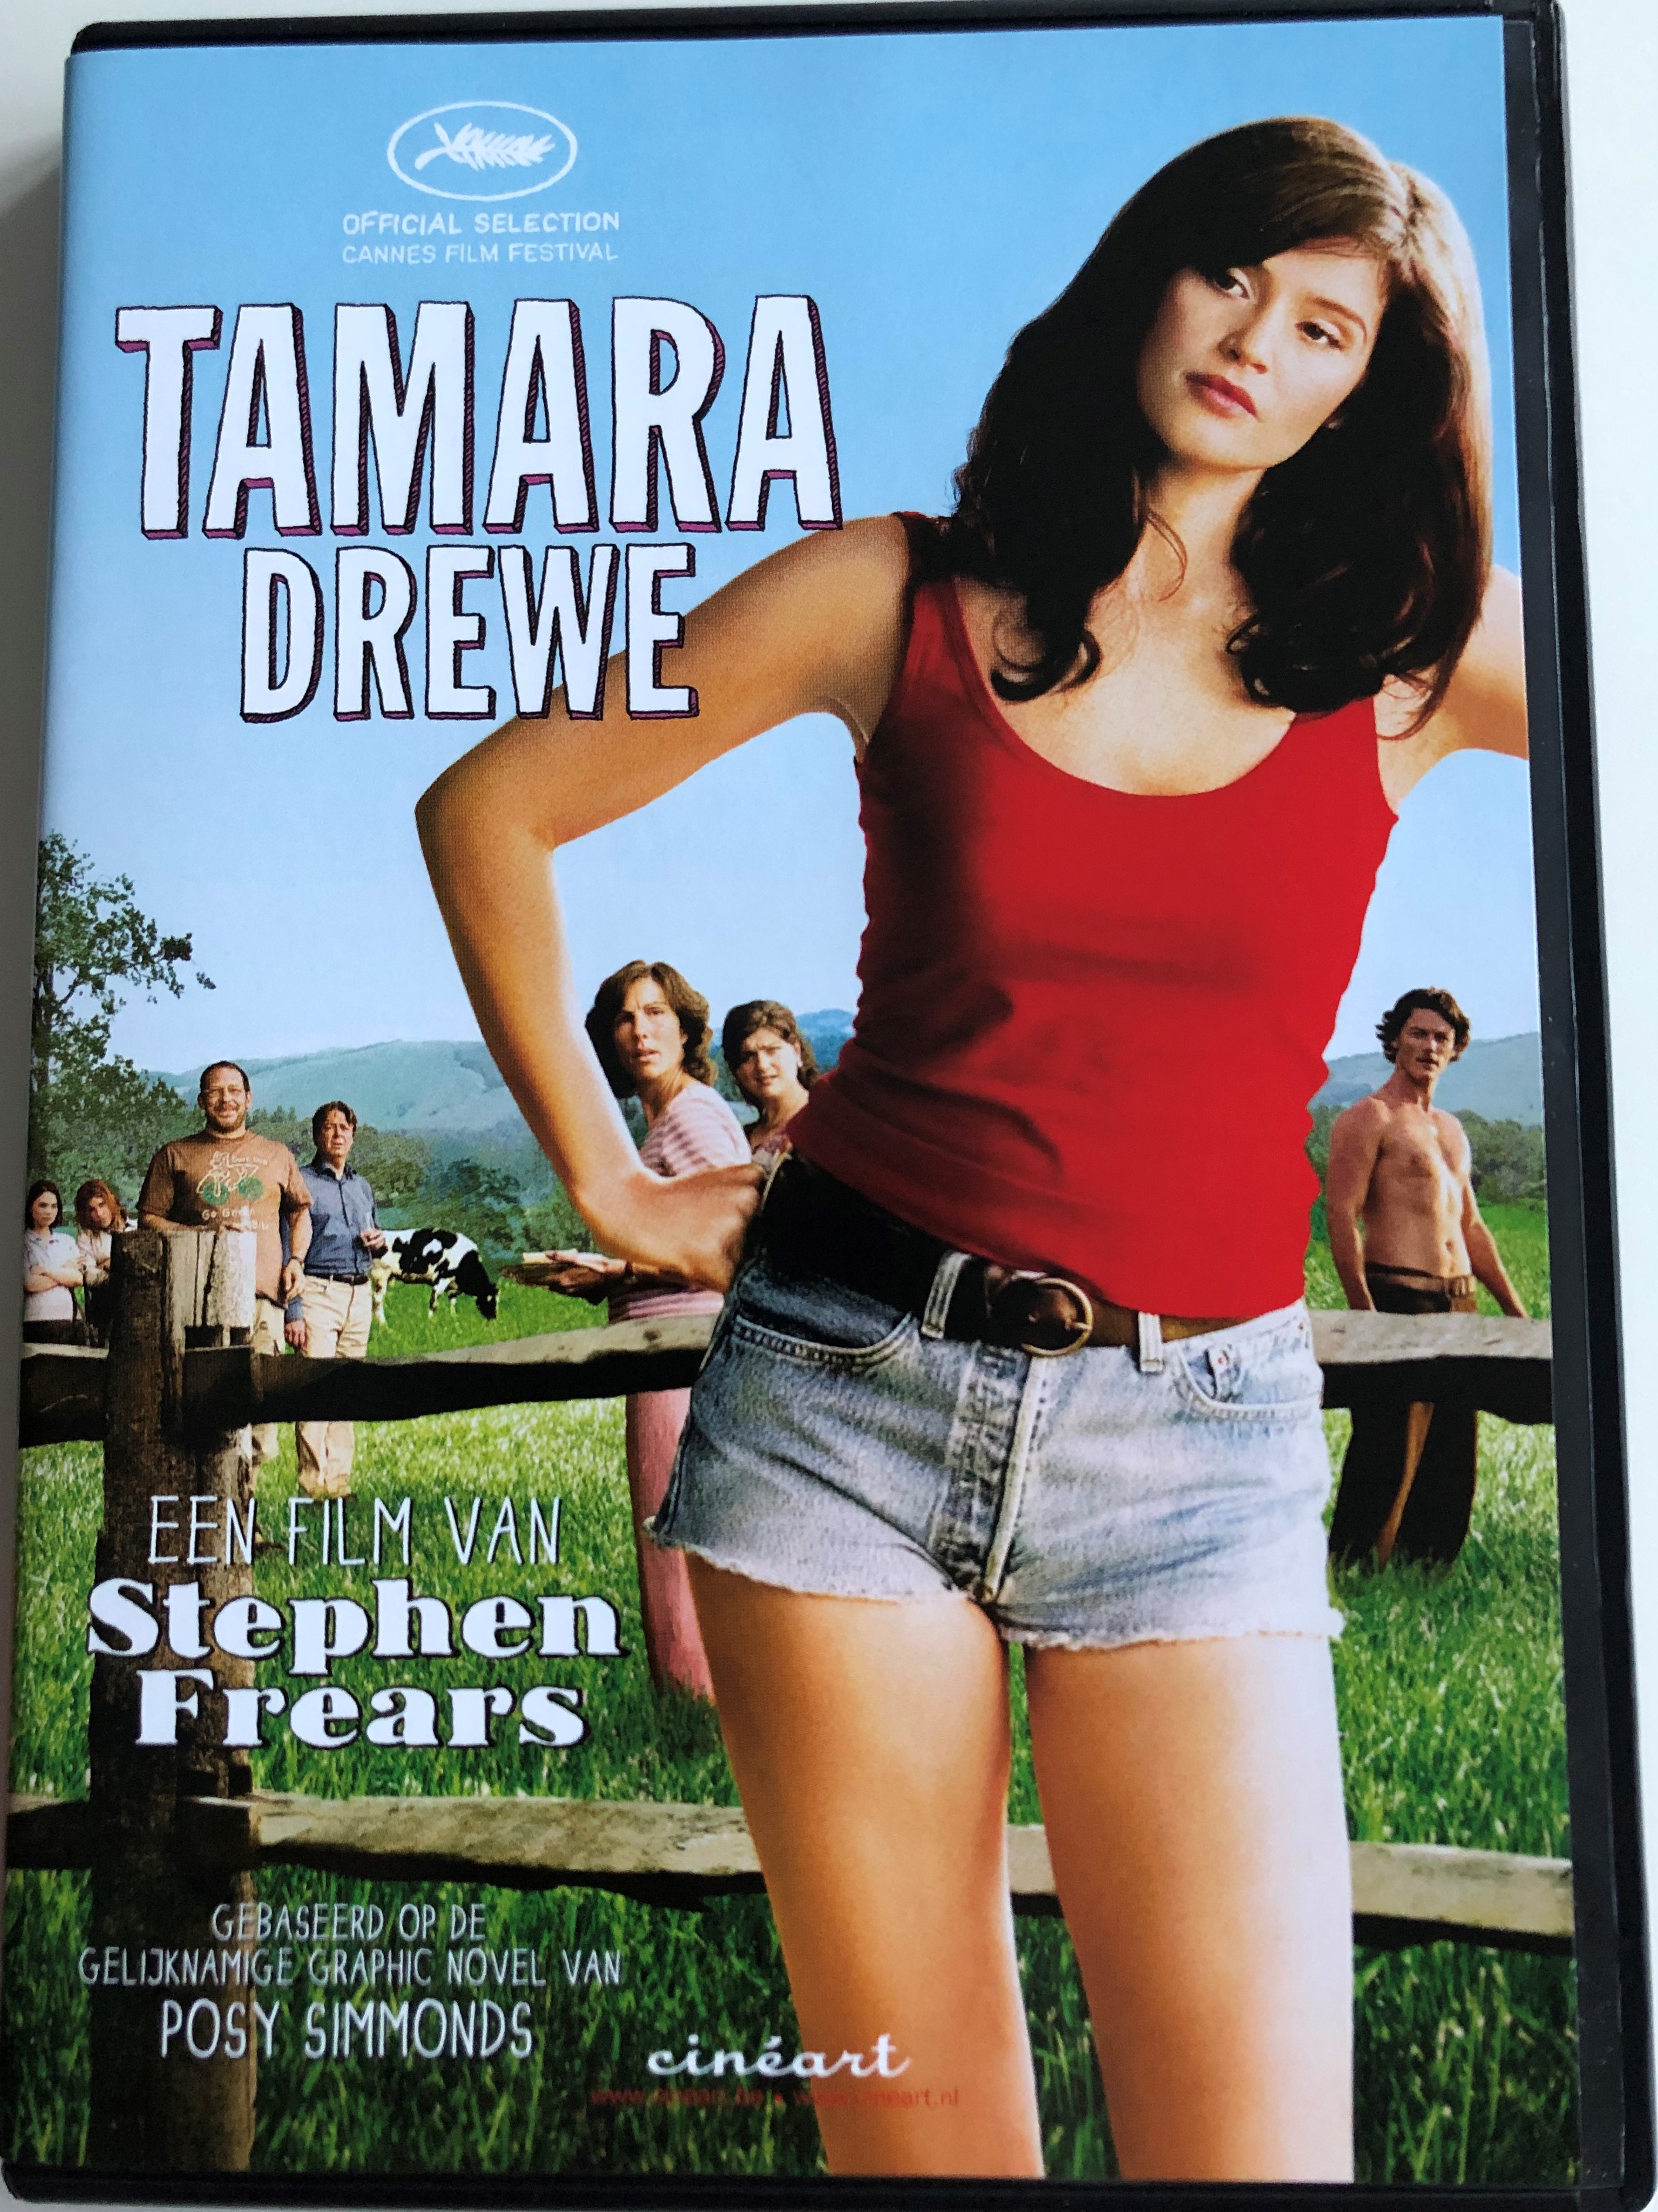 Tamara Drewe DVD 2010 / Directed by Stephen Frears / Starring: Gemma  Arterton, Dominic Cooper, Luke Evans, Tamsin Greig - bibleinmylanguage